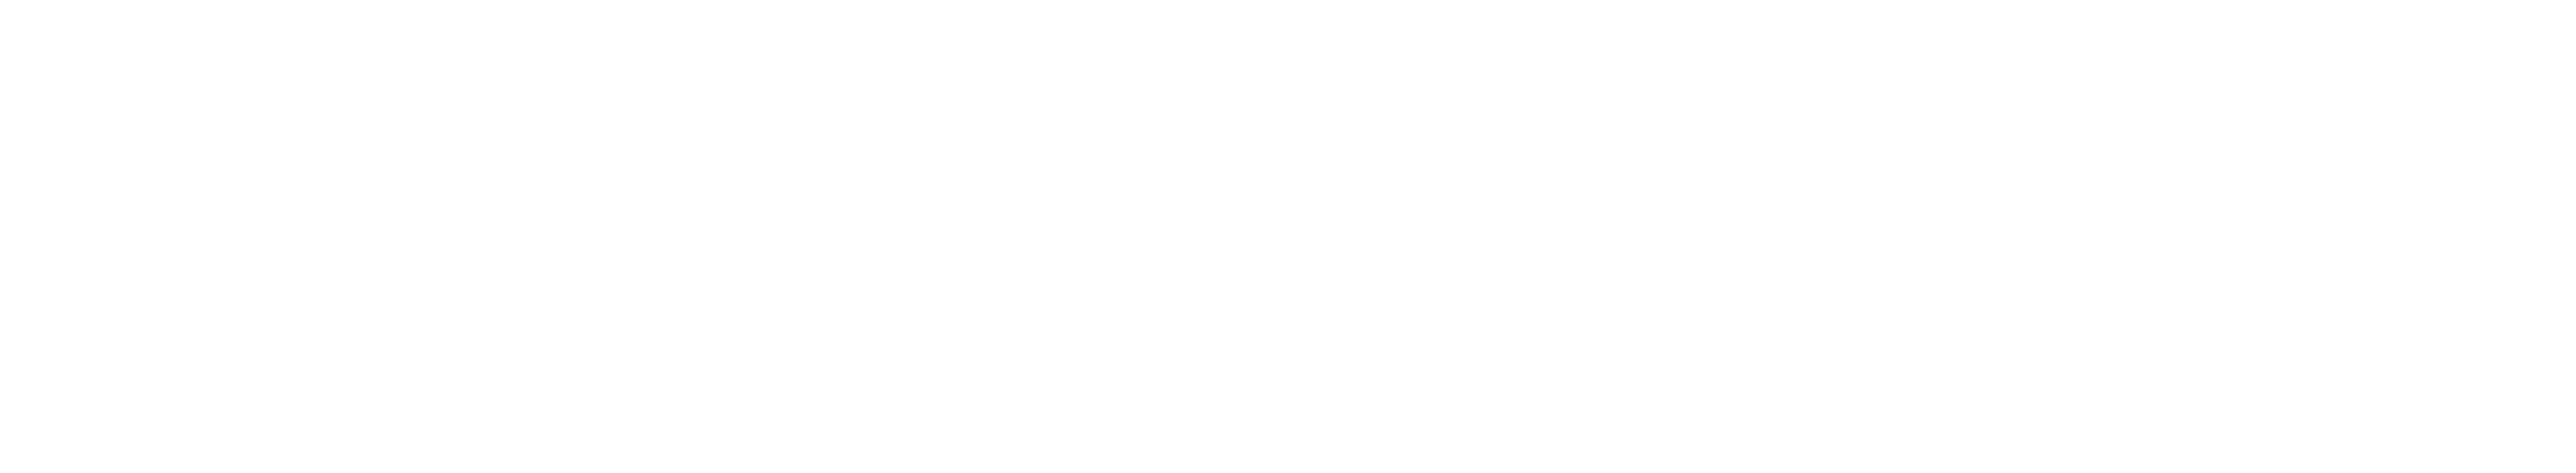 vanguardland logo